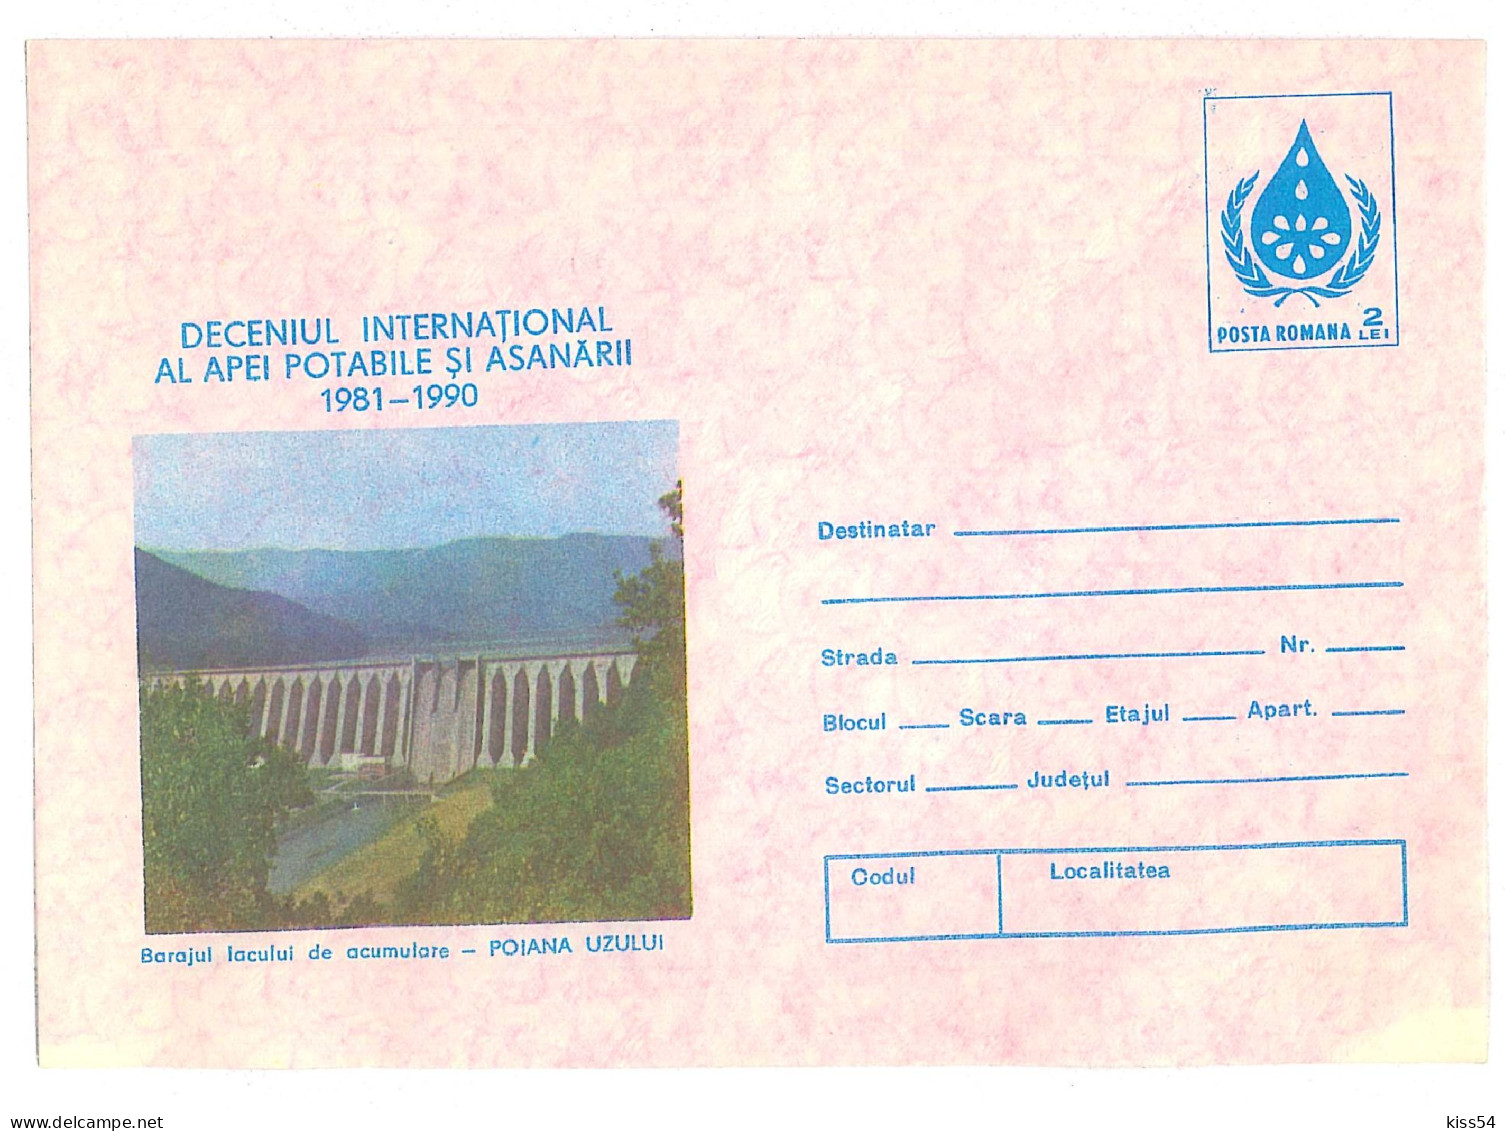 IP 84 - 235 POIANA UZULUI, The Hydroelectric Dam - Stationery - Unused - 1984 - Postal Stationery